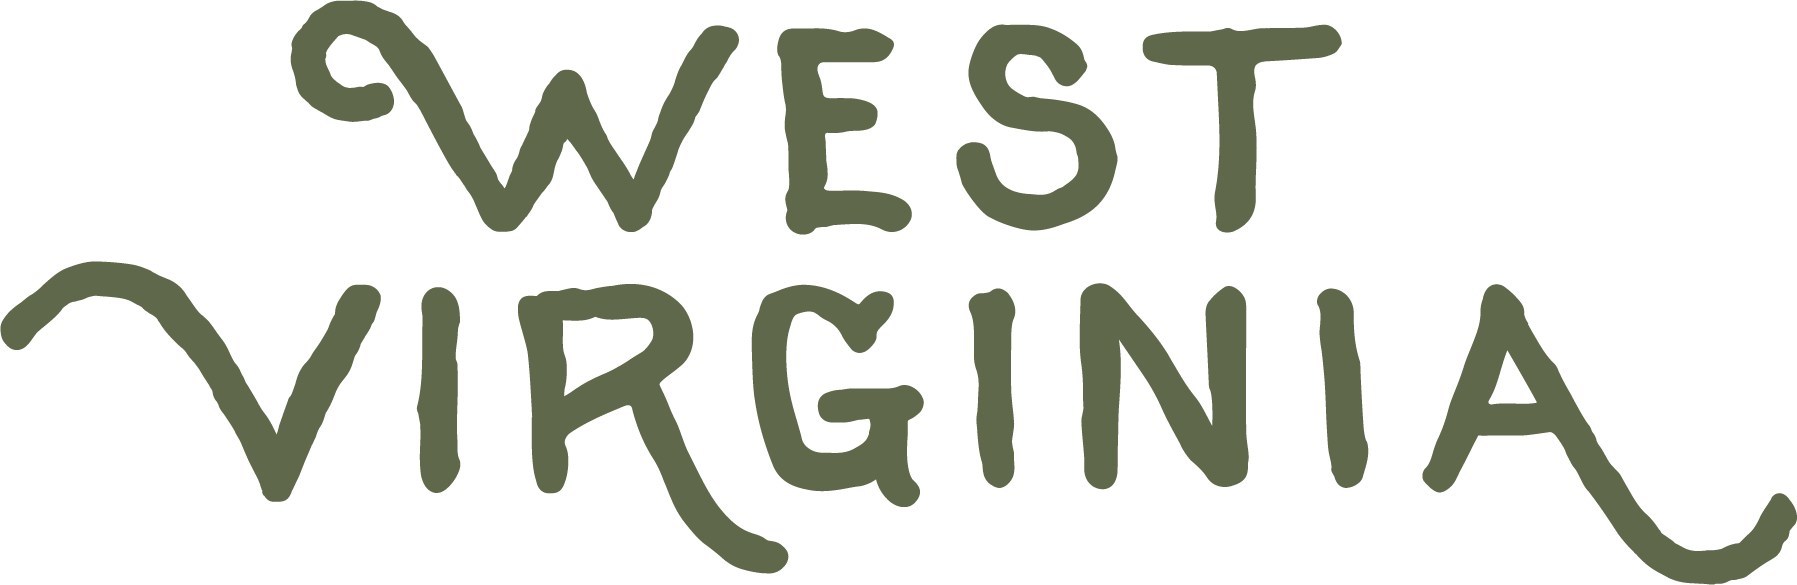 West Virginia Department of Tourism Logo (PRNewsfoto/The West Virginia Department of Tourism)